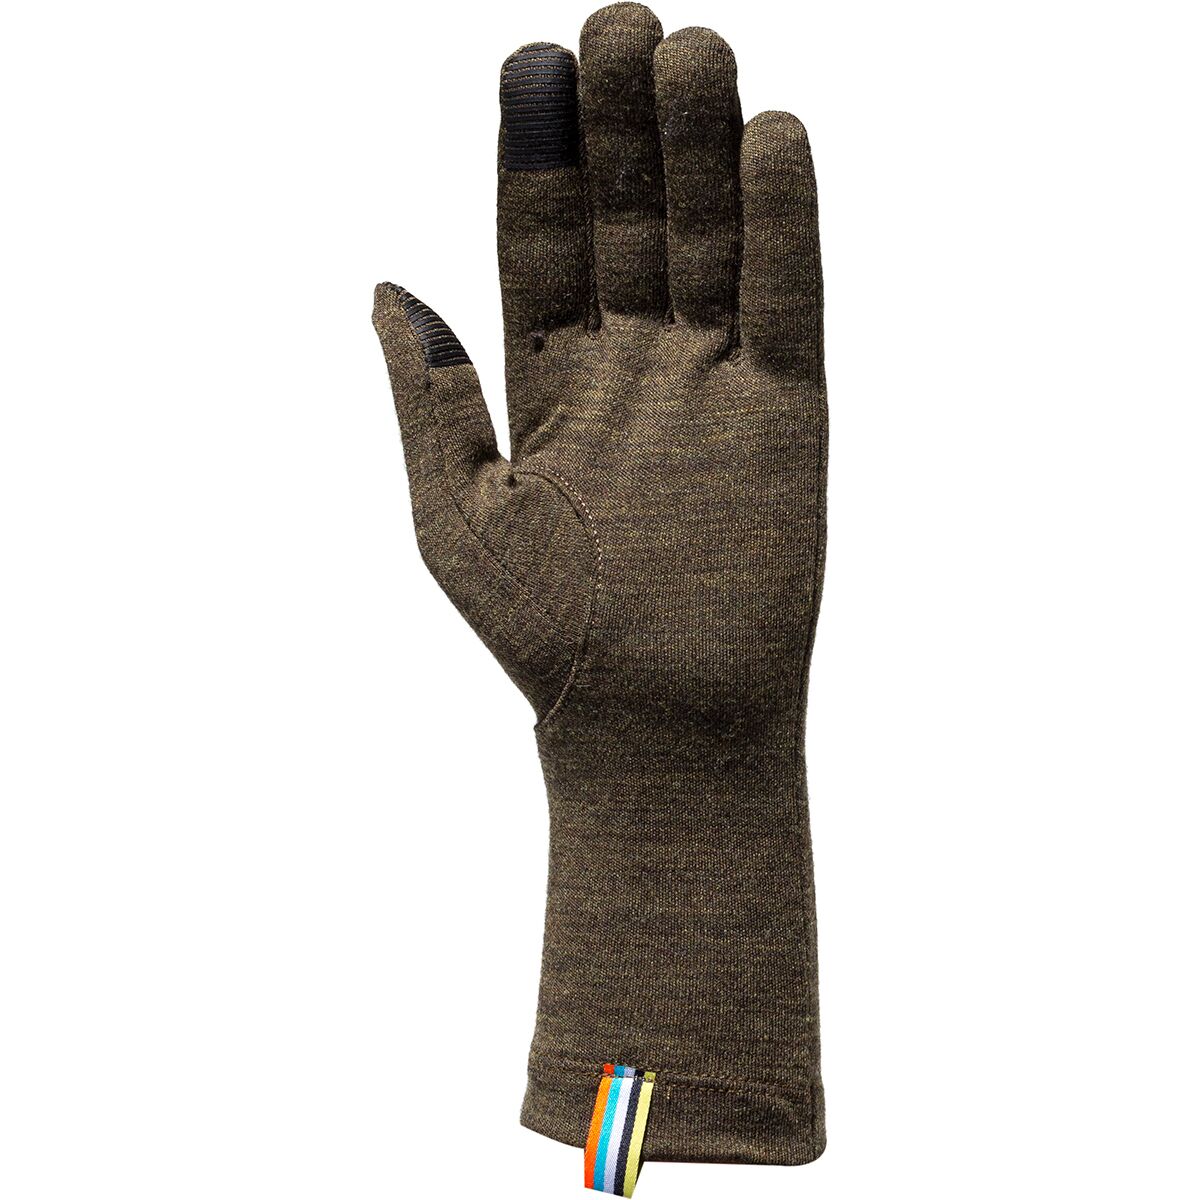 Smartwool Merino 250 Glove - Accessories